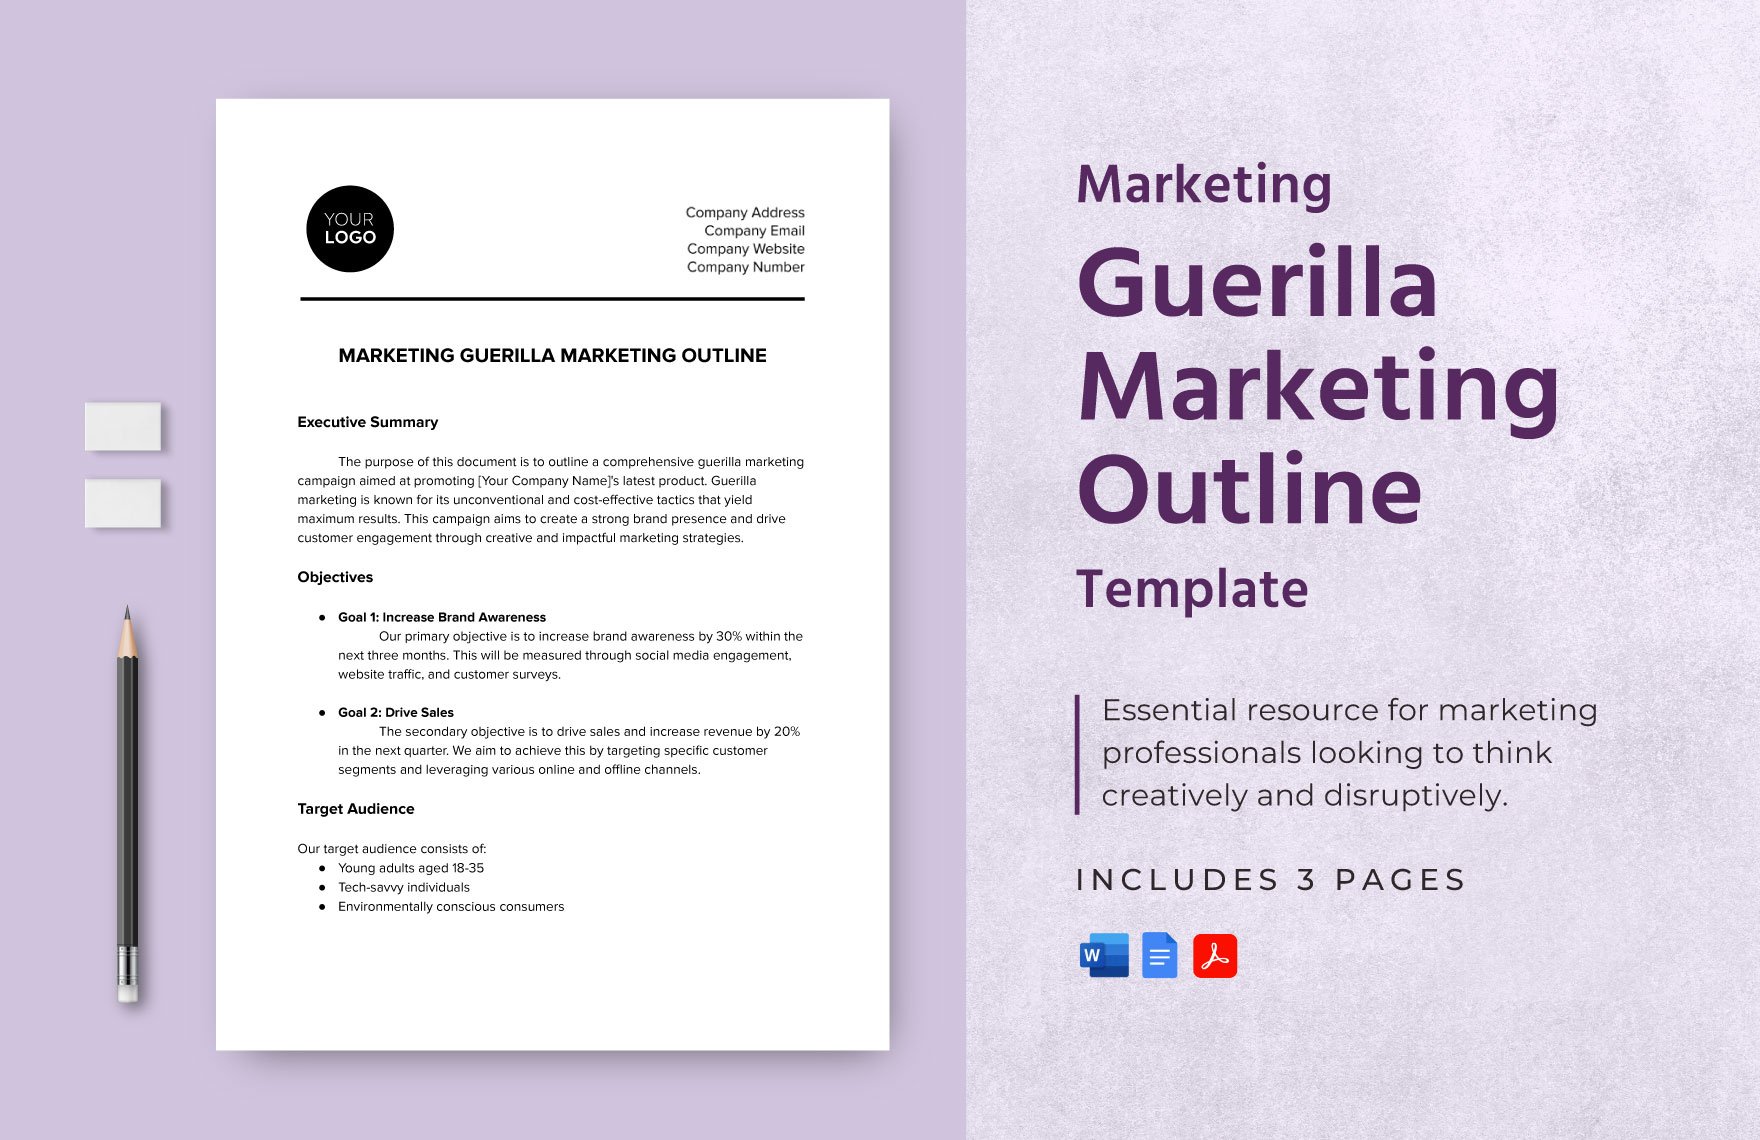 Marketing Guerilla Marketing Outline Template in Word, Google Docs, PDF